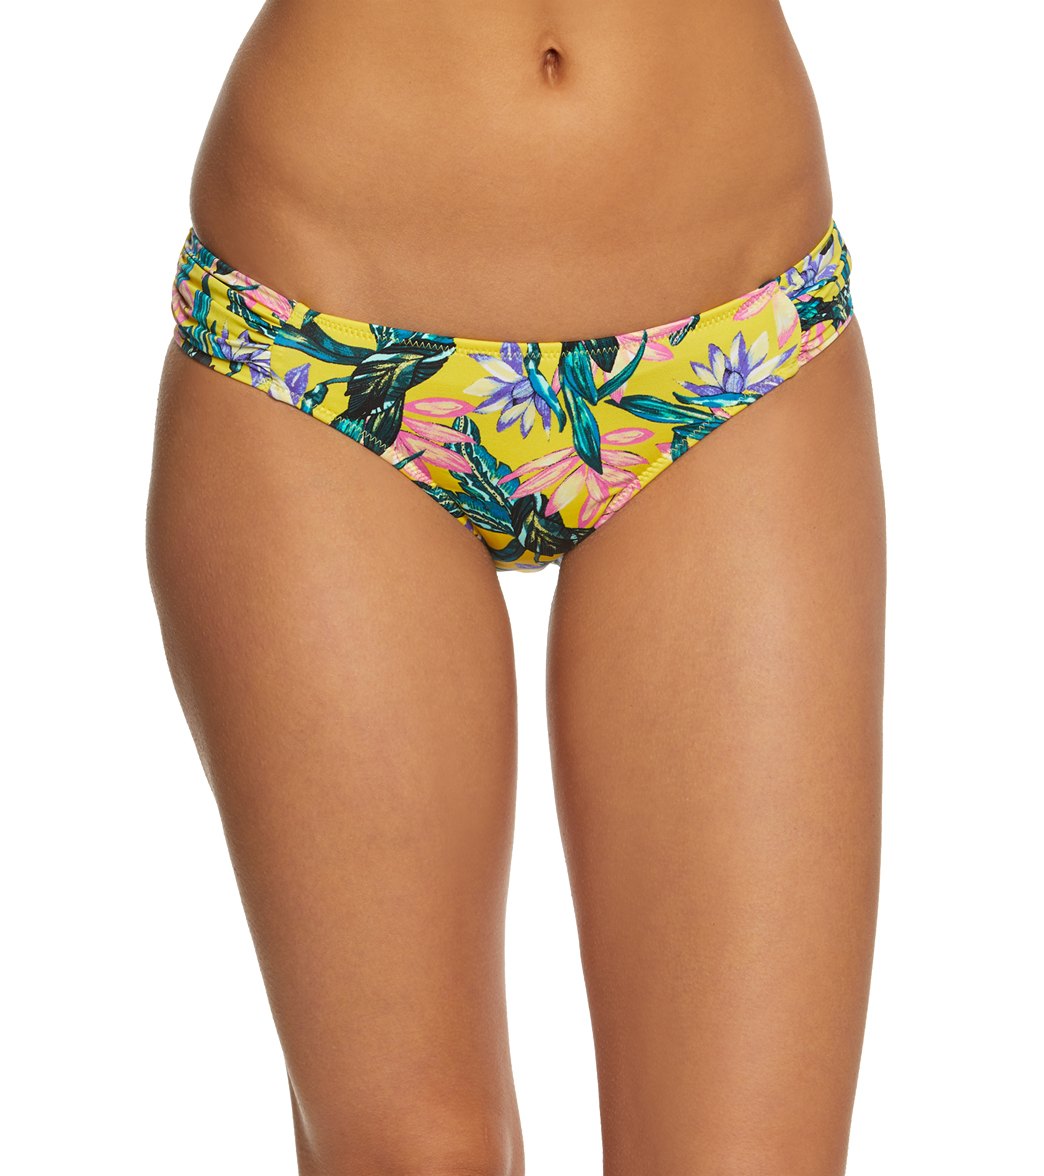 Jessica Simpson Lanakai Side Shirred Hipster Bikini Bottom - Pineapple Multi Large - Swimoutlet.com